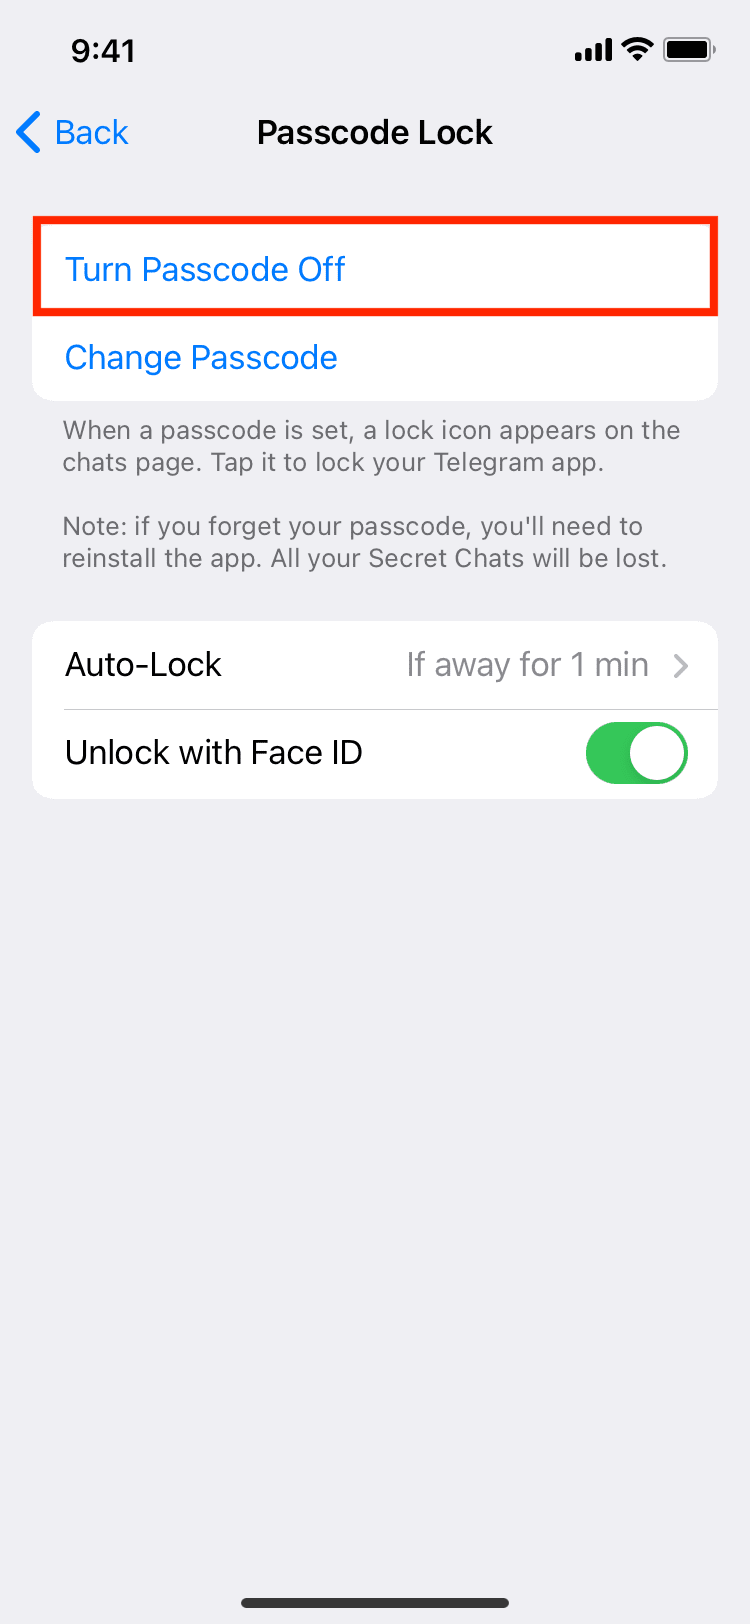 Turn Passcode Off in Telegram app on iPhone